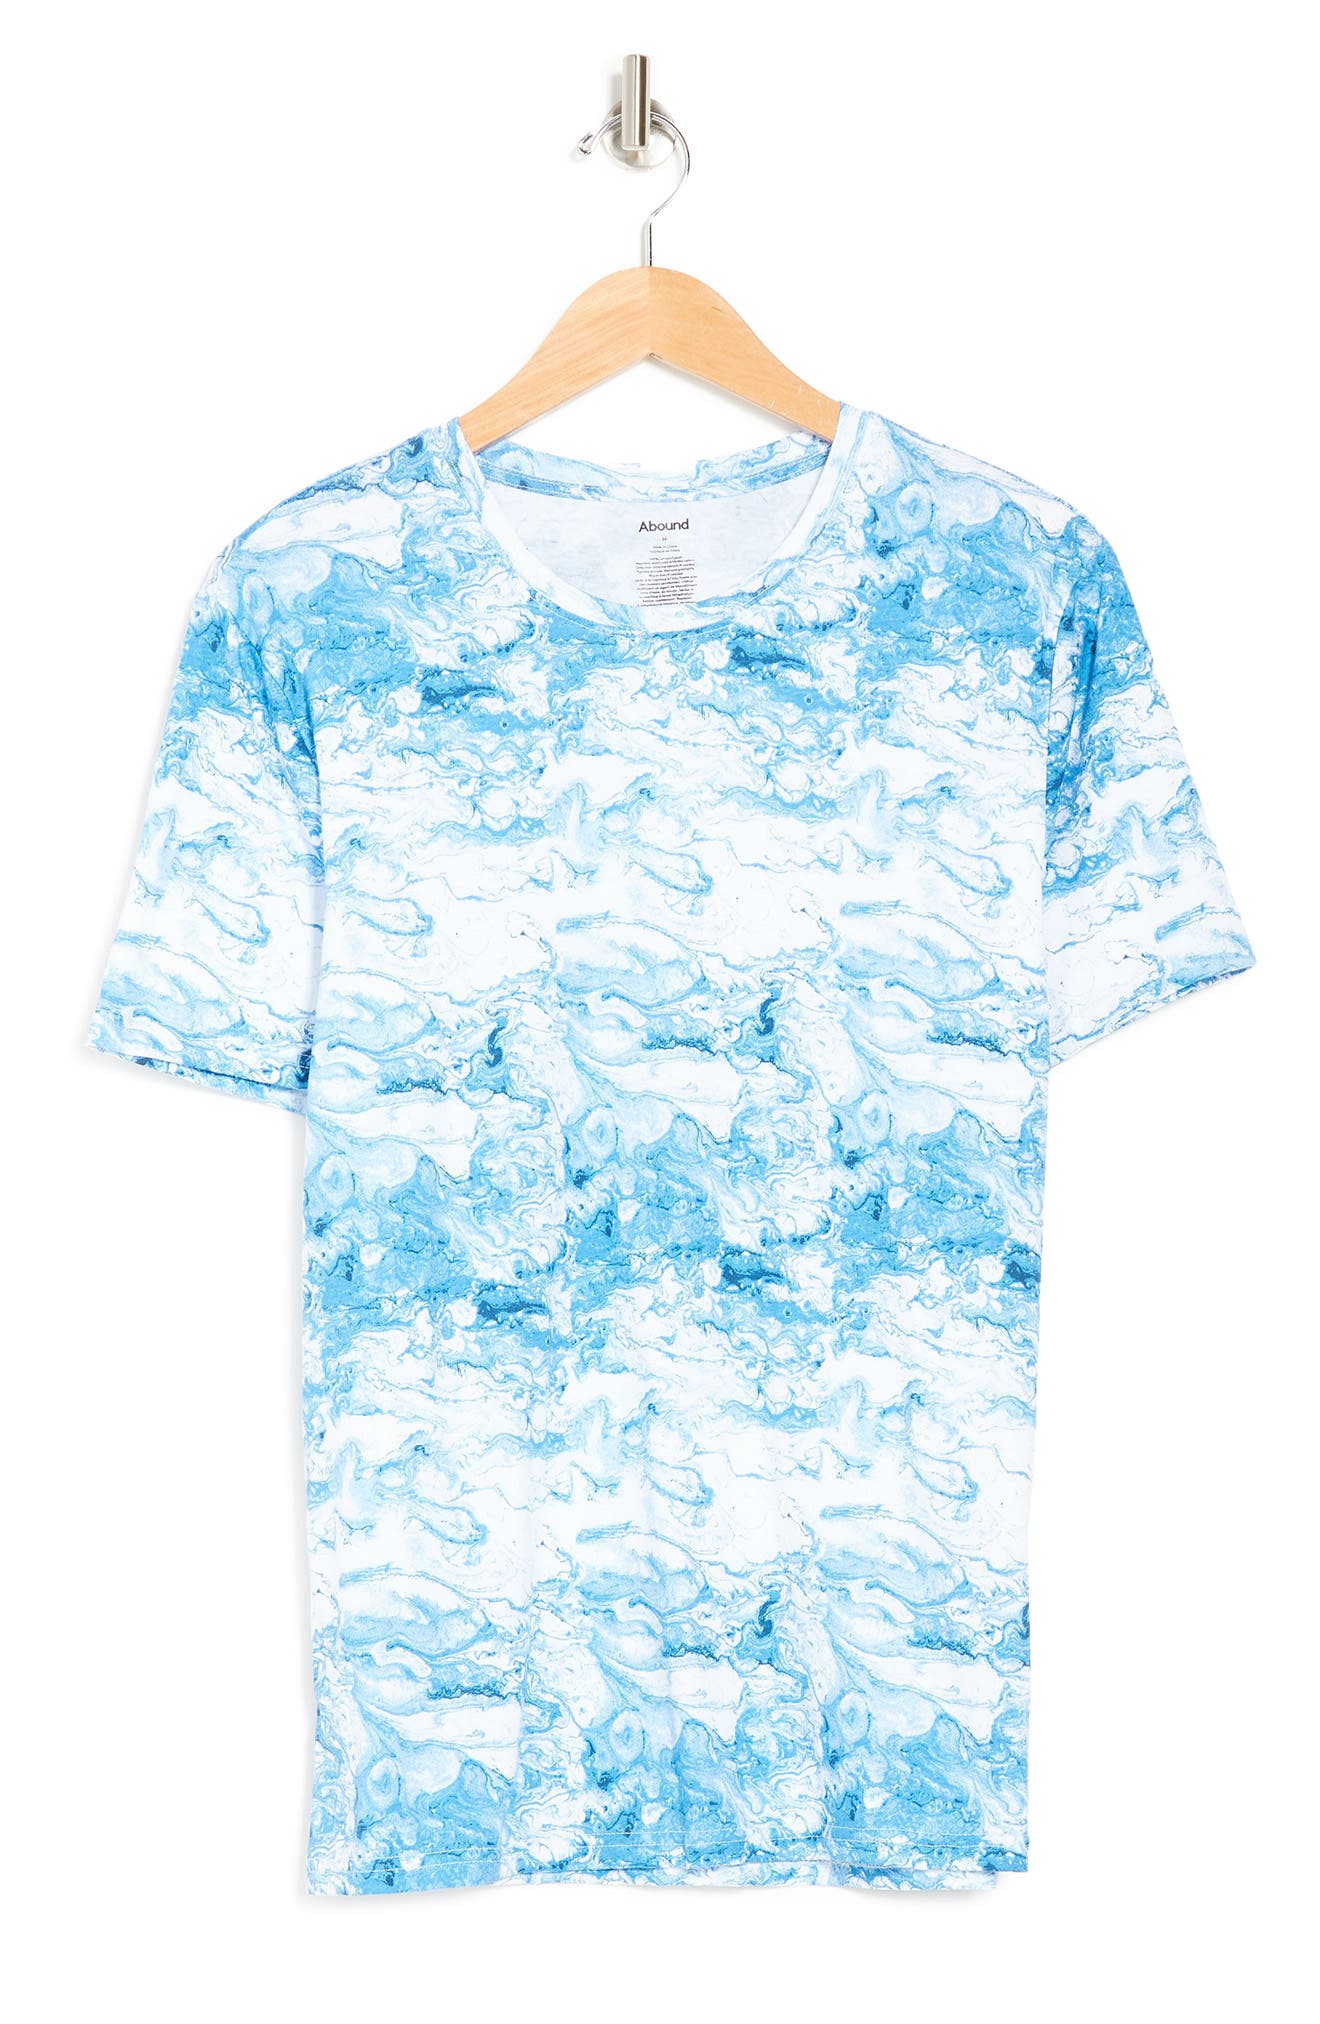 Abound Printed Crew Neck Short Sleeve Shirt In Light/pastel Blue